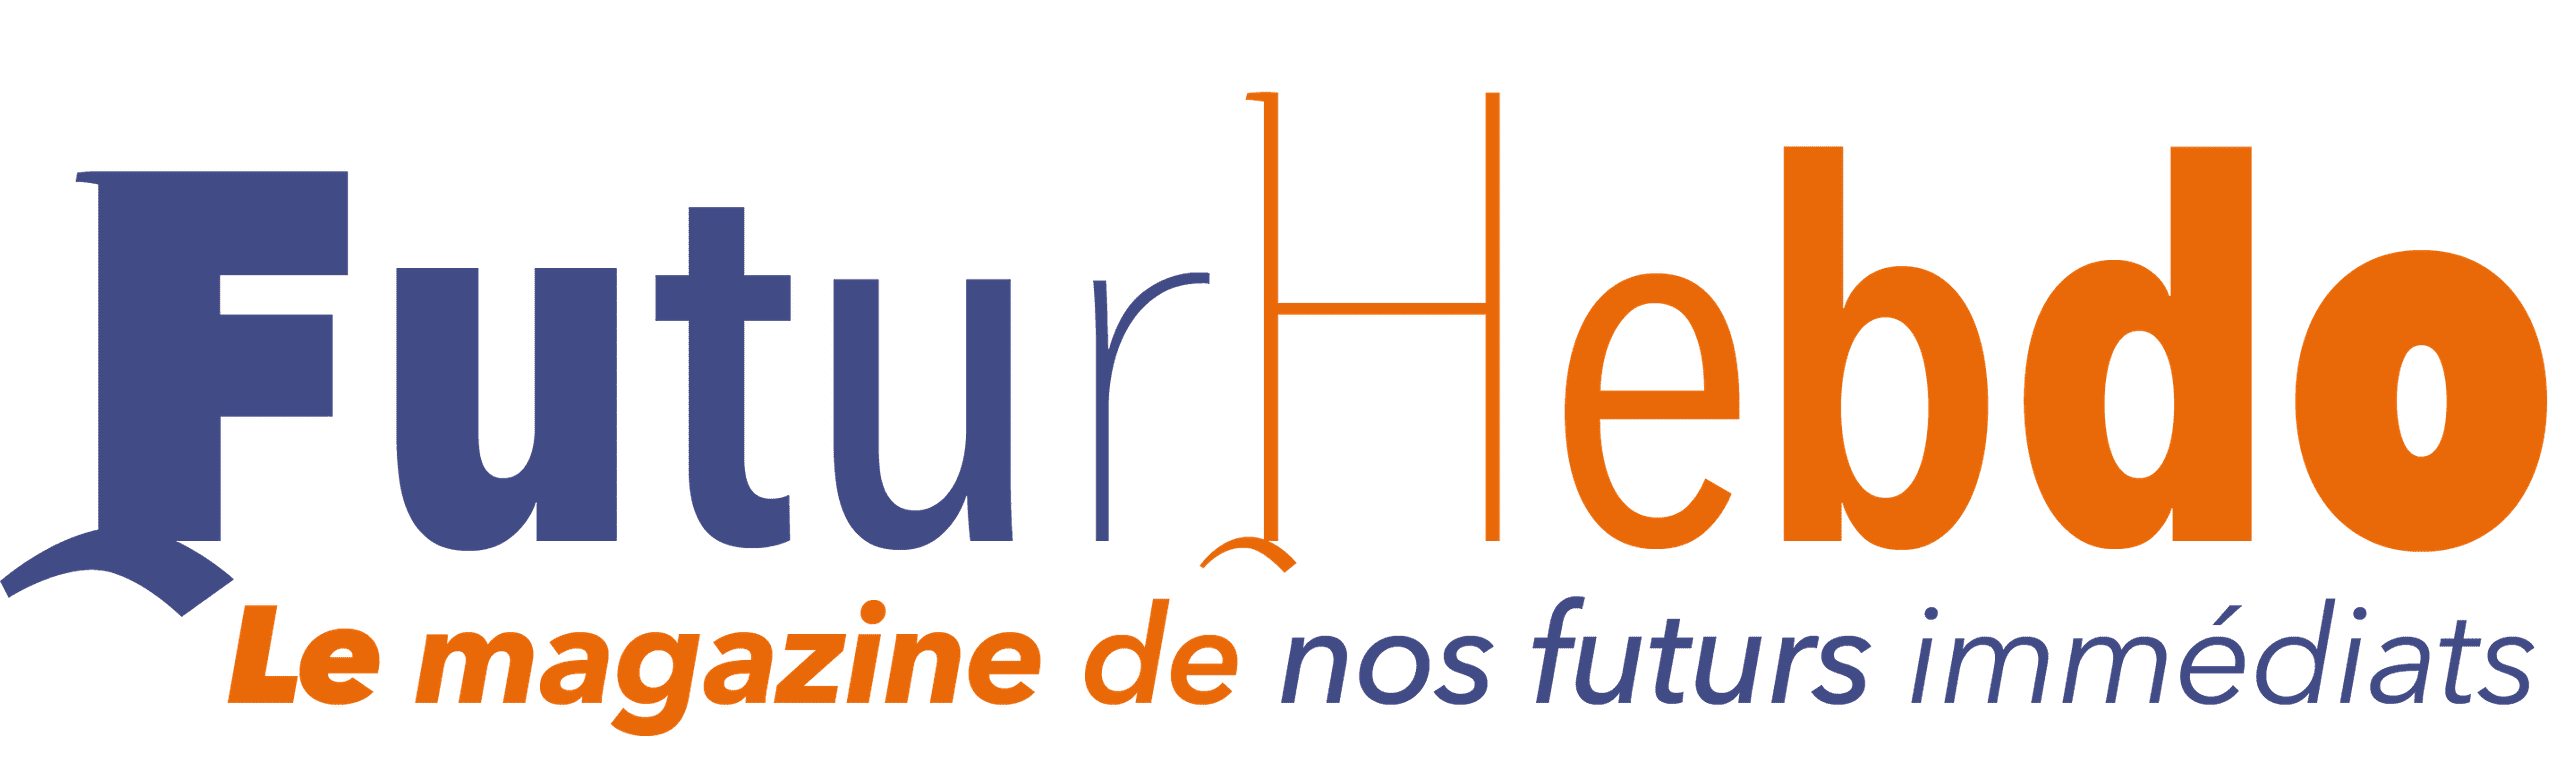 FuturHebdo - Logo couleur